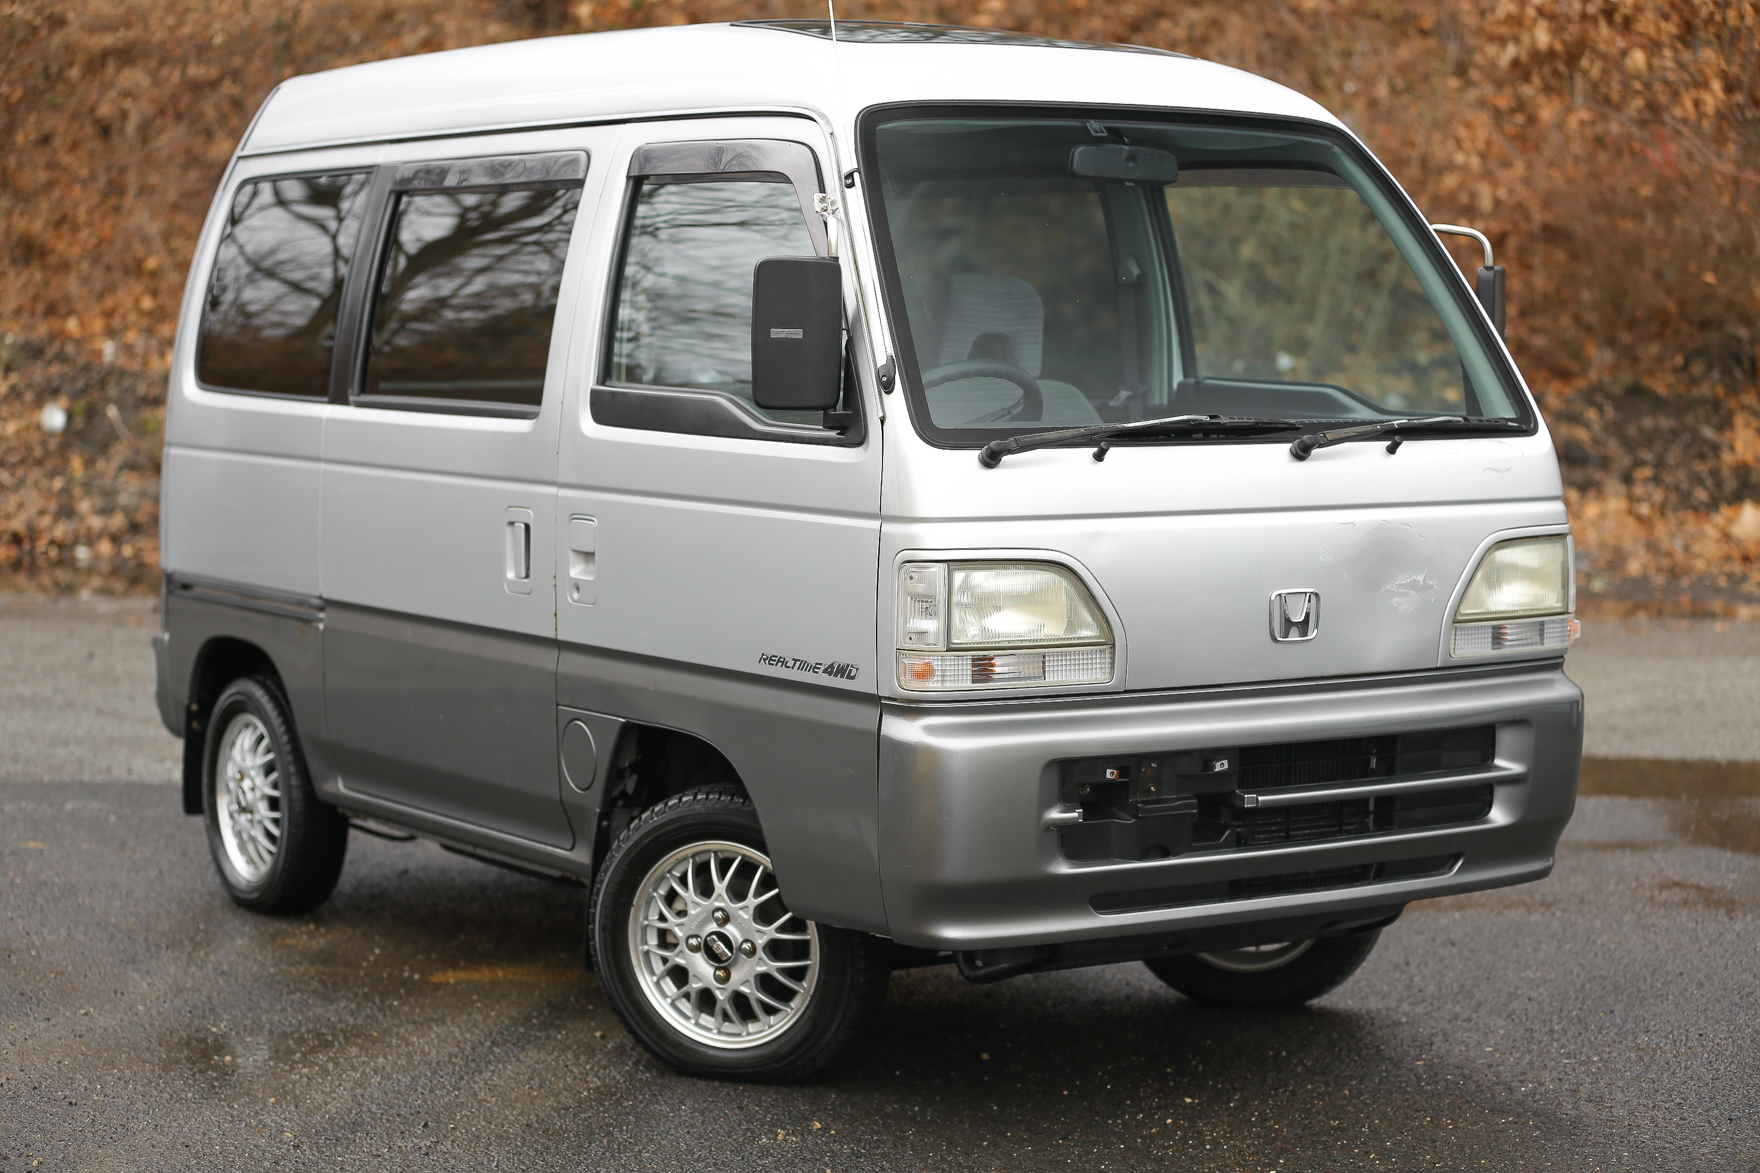 1996 Honda Street Van - $11,500